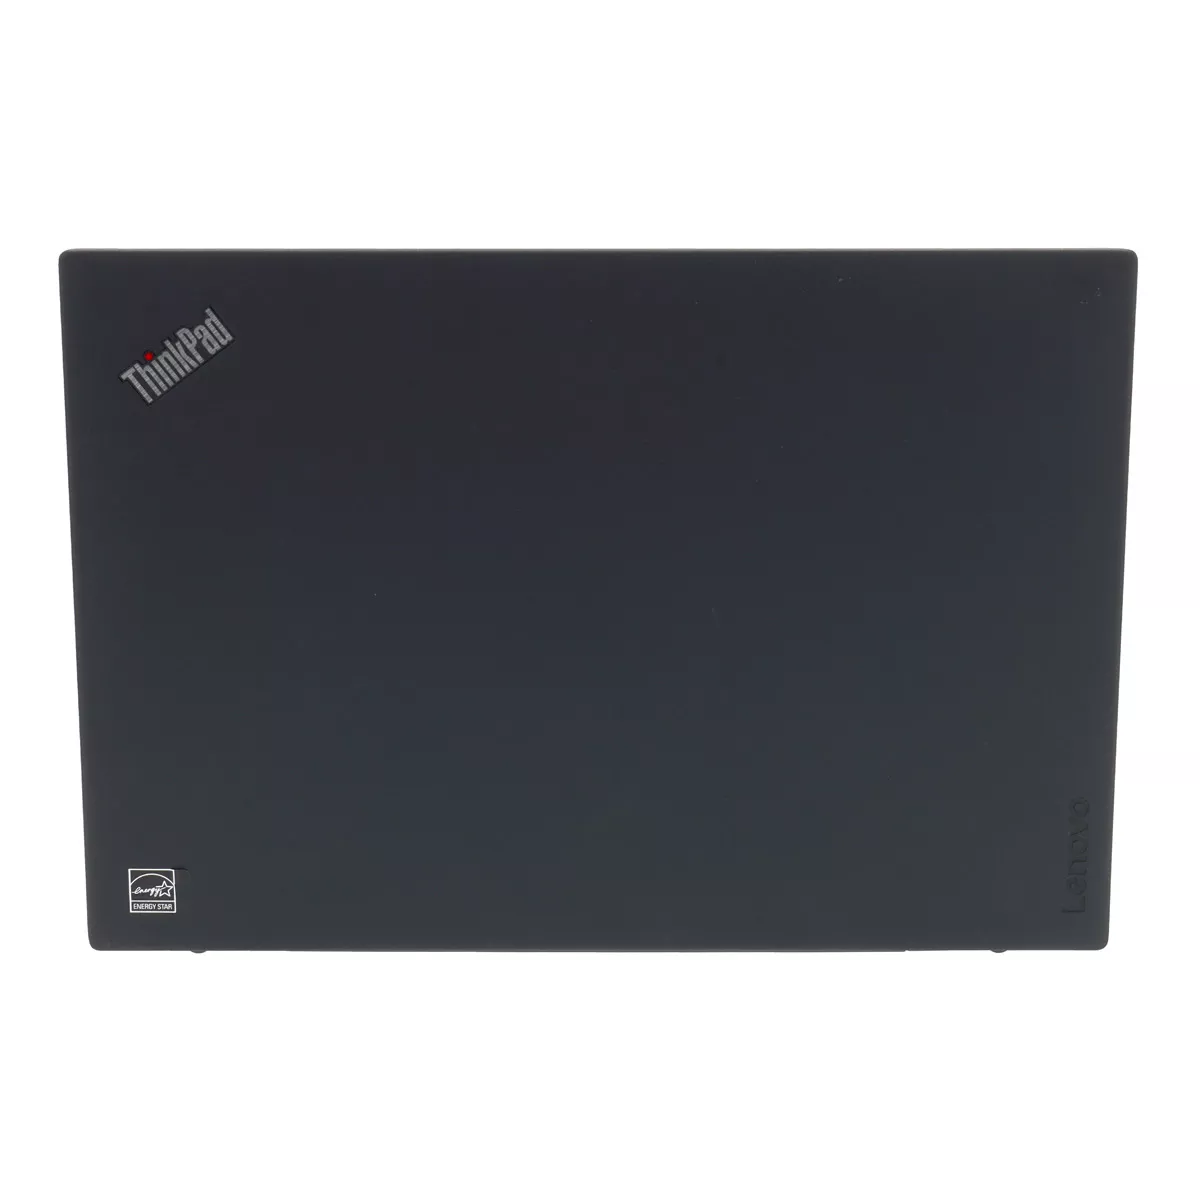 Lenovo ThinkPad T470 Core i5 7200U Full-HD Touch 240 GB M.2 SSD Webcam B